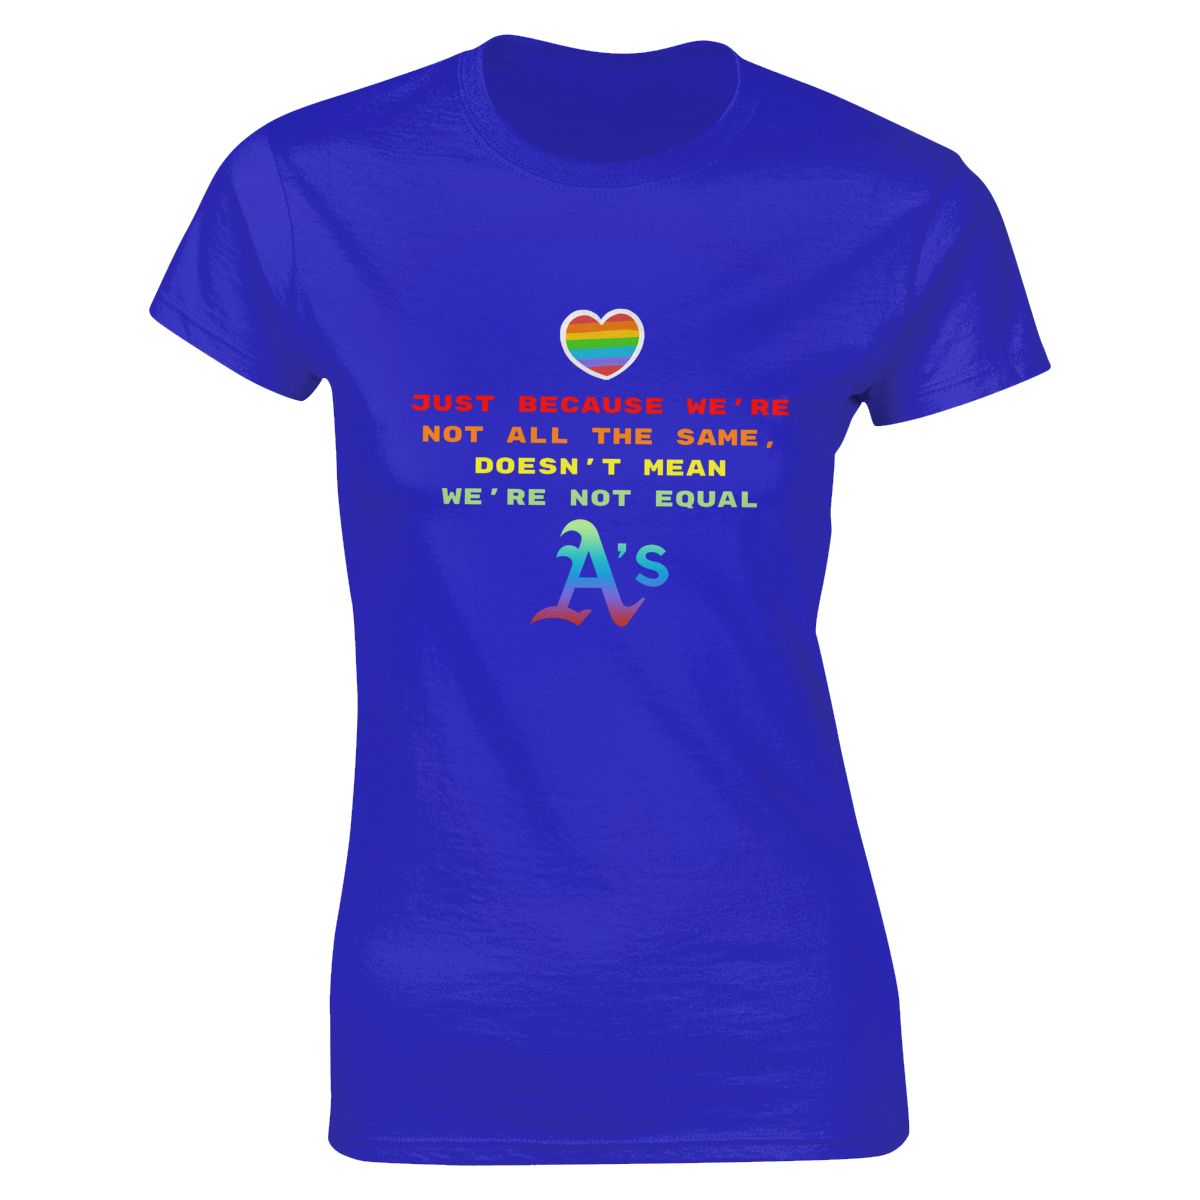 Oakland Athletics Rainbow Awareness Raising Women's Soft Cotton T-Shirt